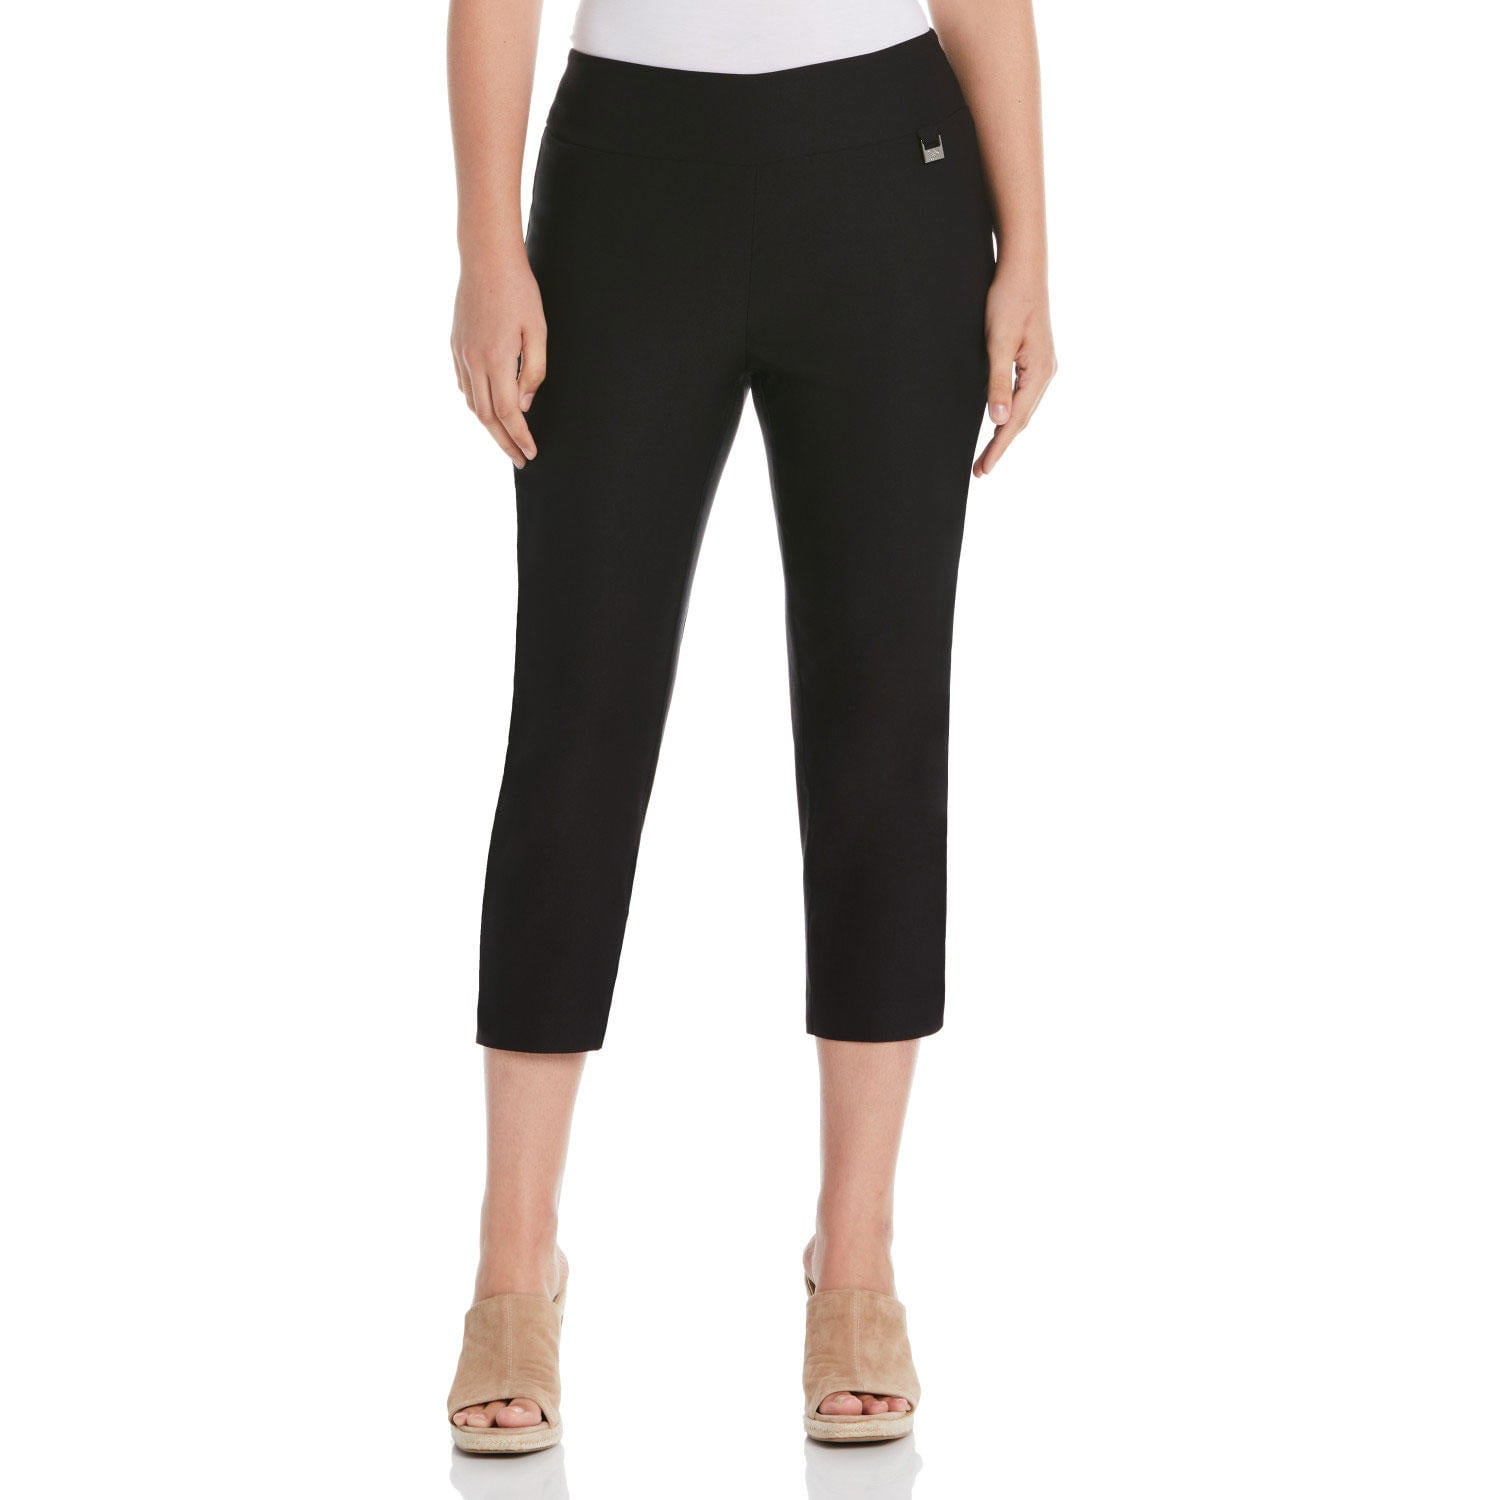 Rafaela Comfort Khaki Capri Pants Woman's Size 10 P NEW - beyond